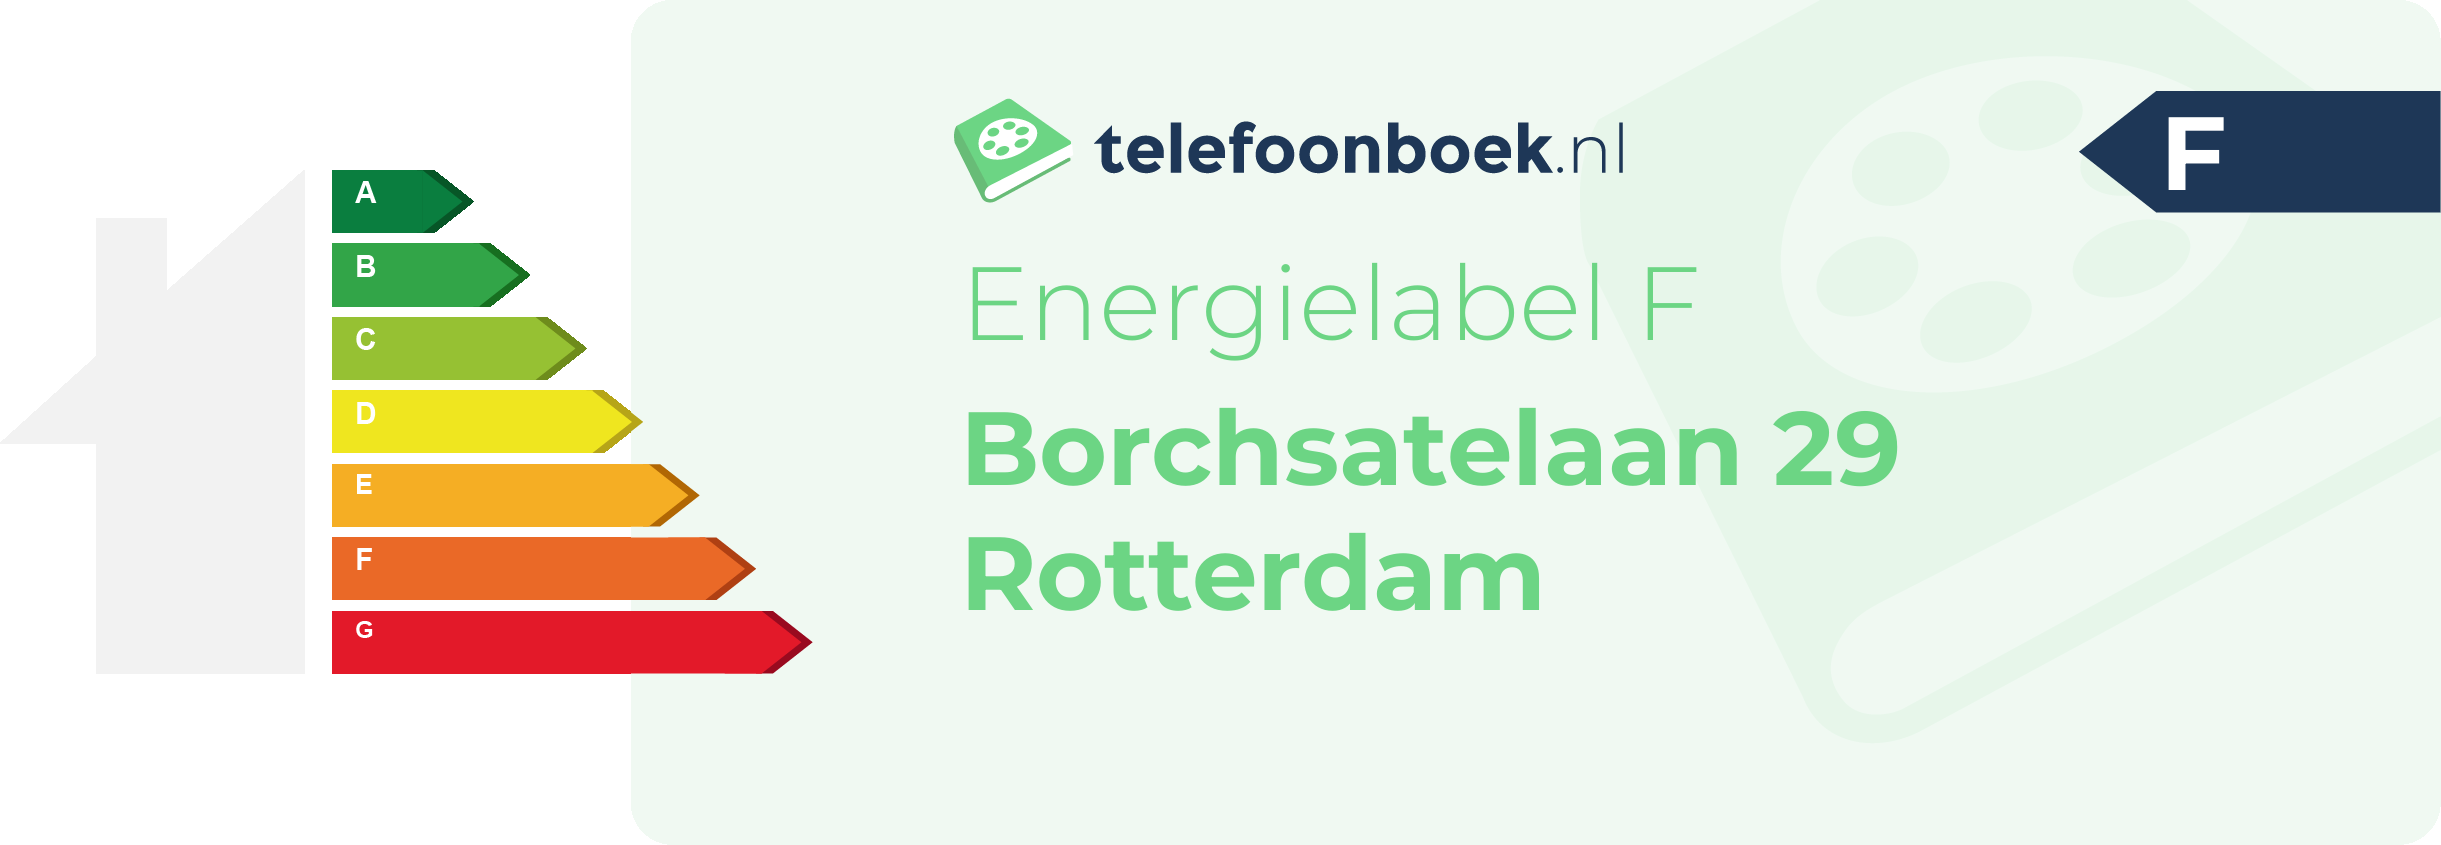 Energielabel Borchsatelaan 29 Rotterdam